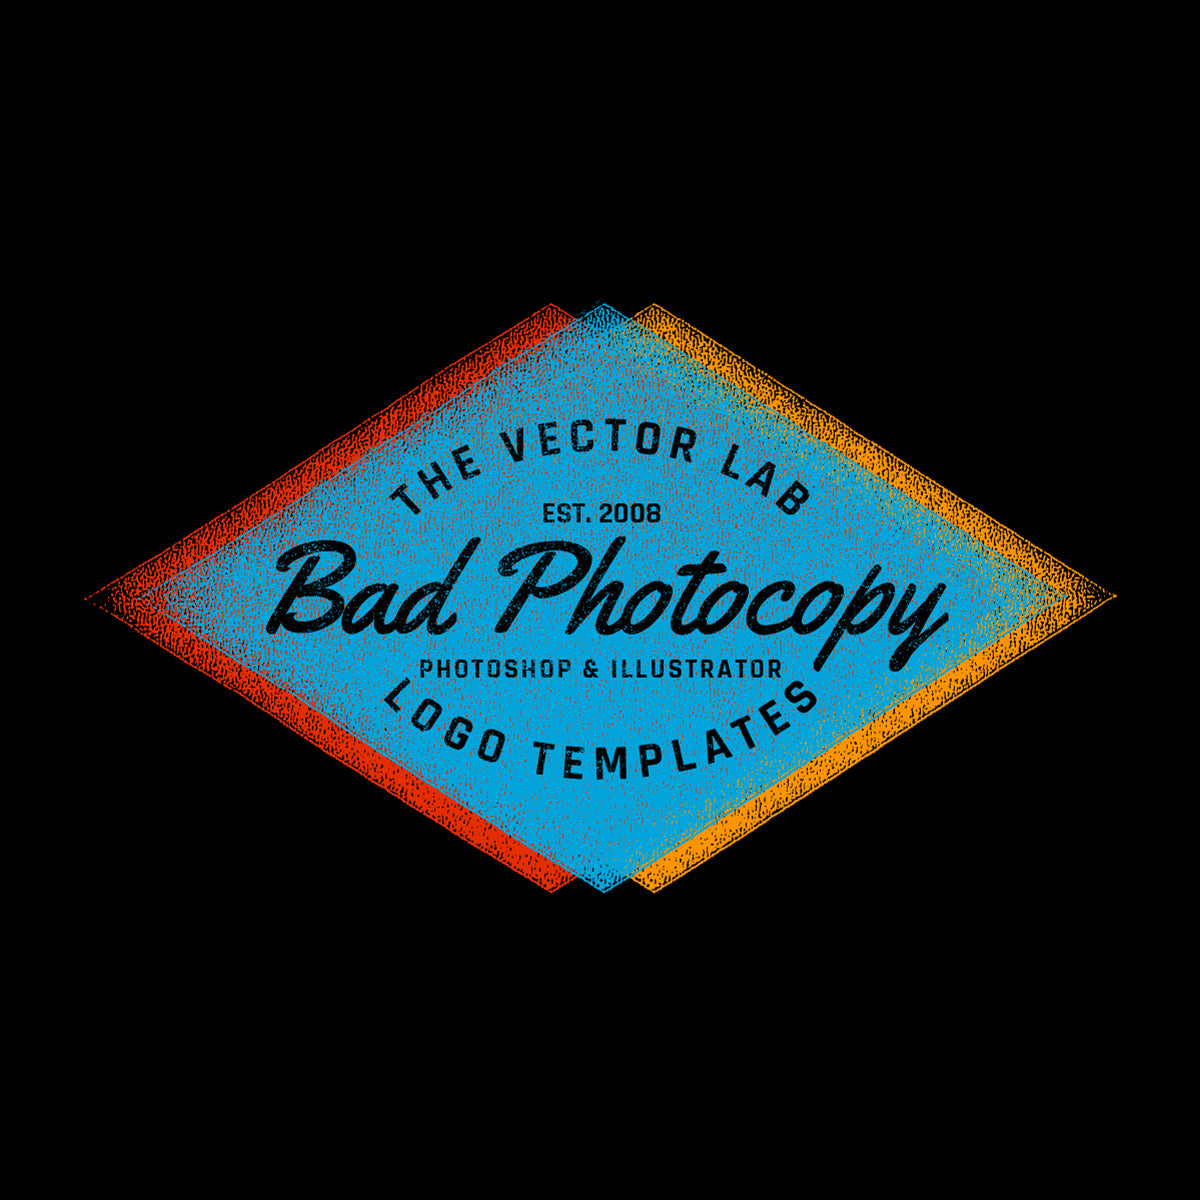 Bad Photocopy Logo Templates for Photoshop and Illustrator